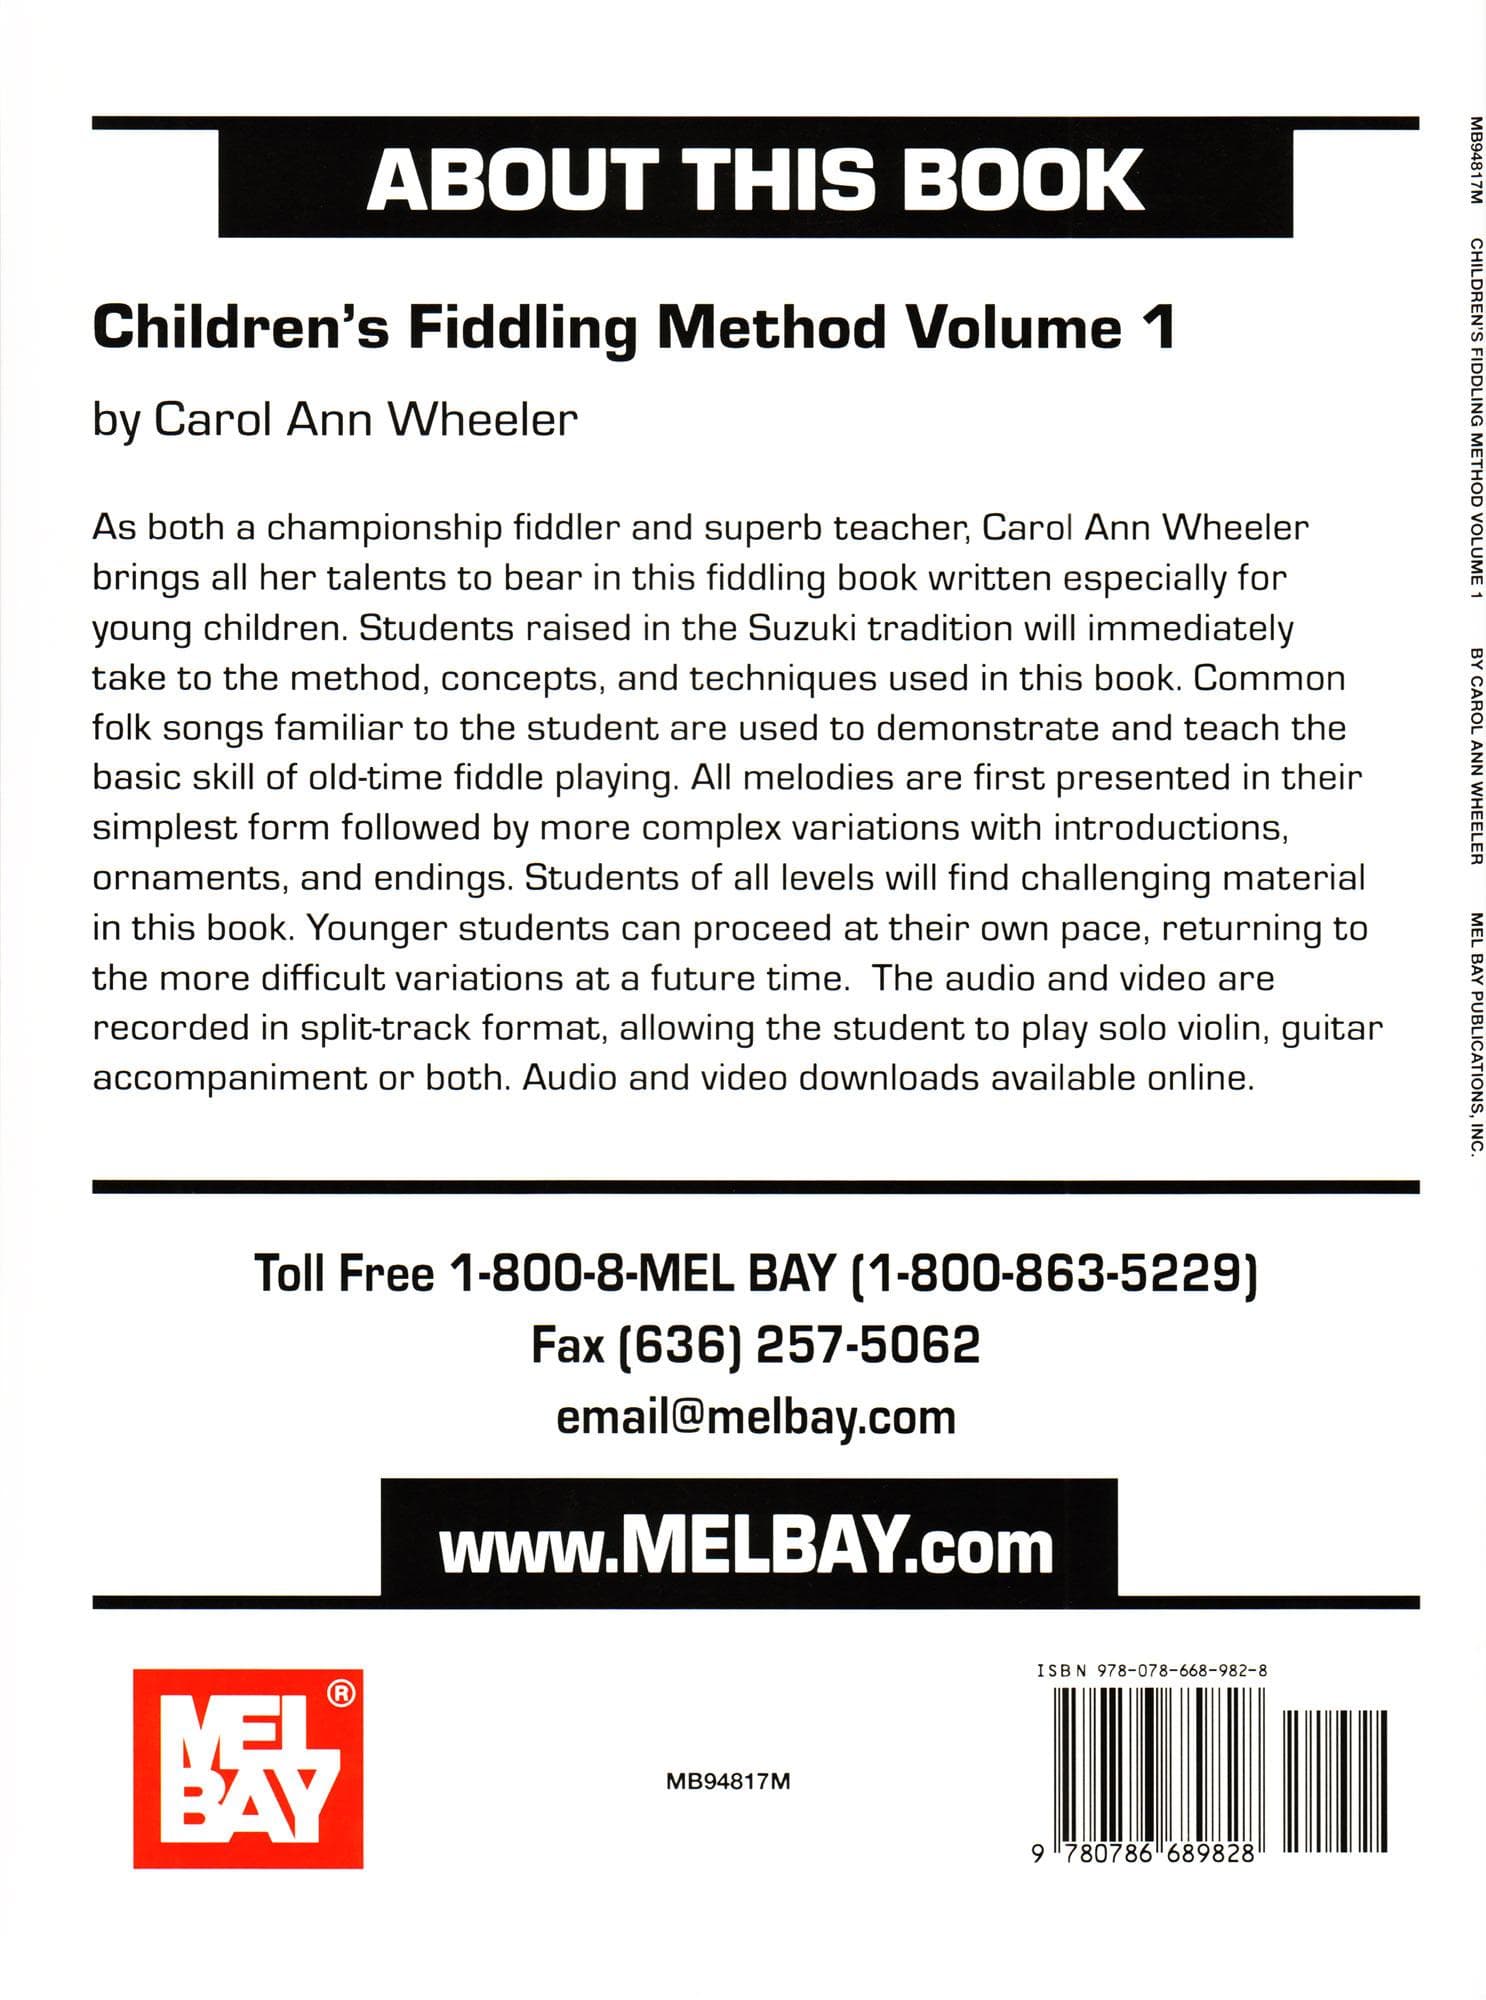 Children's Fiddling Method - Volume 1 - for Violin with Online Audio & Video - by Carol Ann Wheeler - Mel Bay